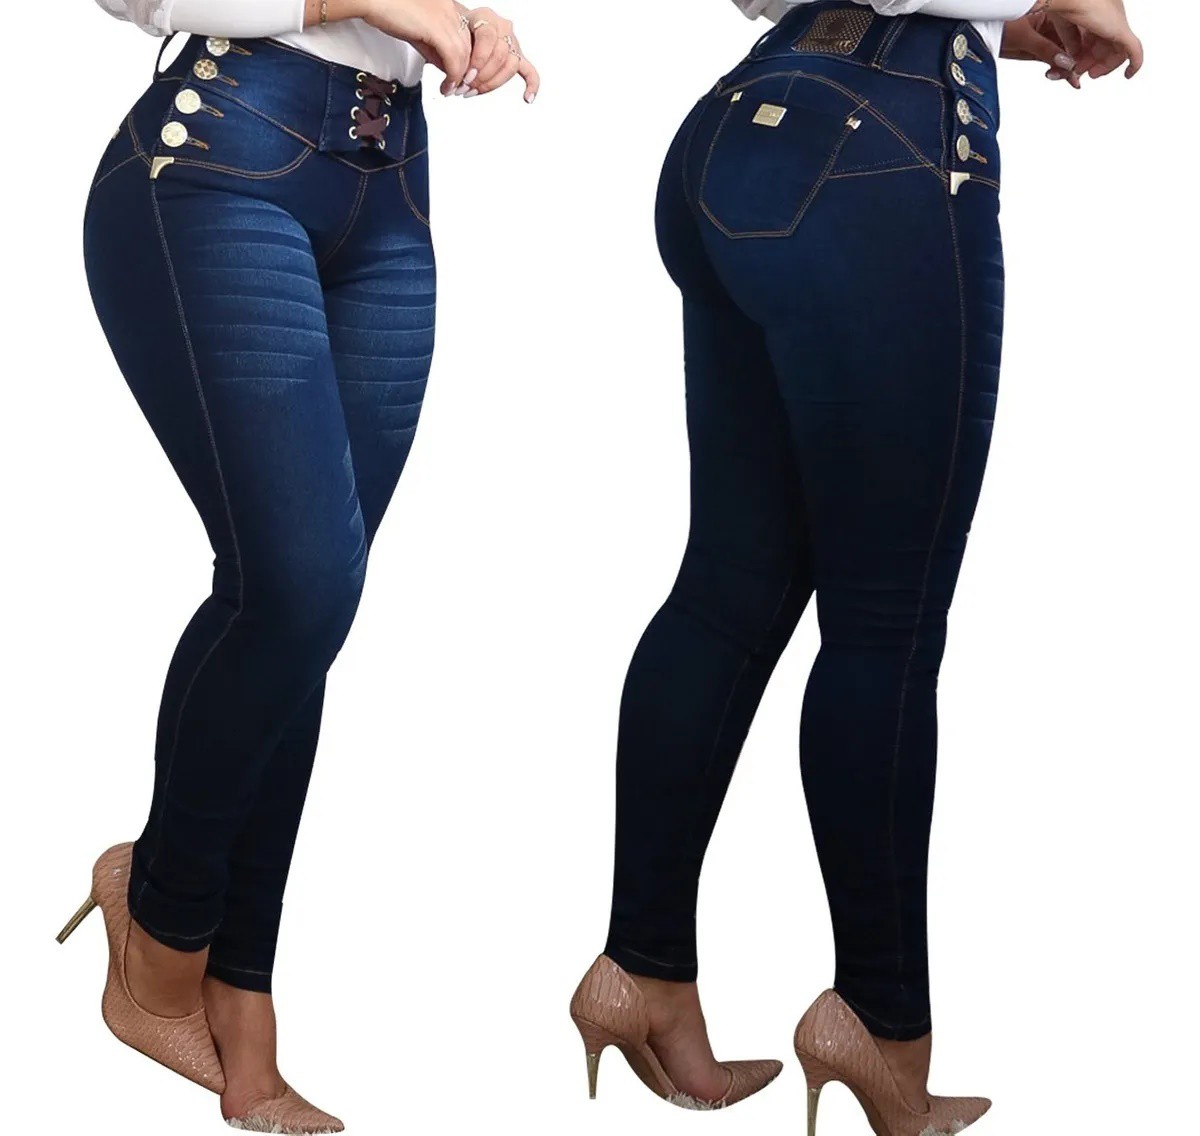 Calca jeans cintura alta cos alto cordinhas estilo pit lycra